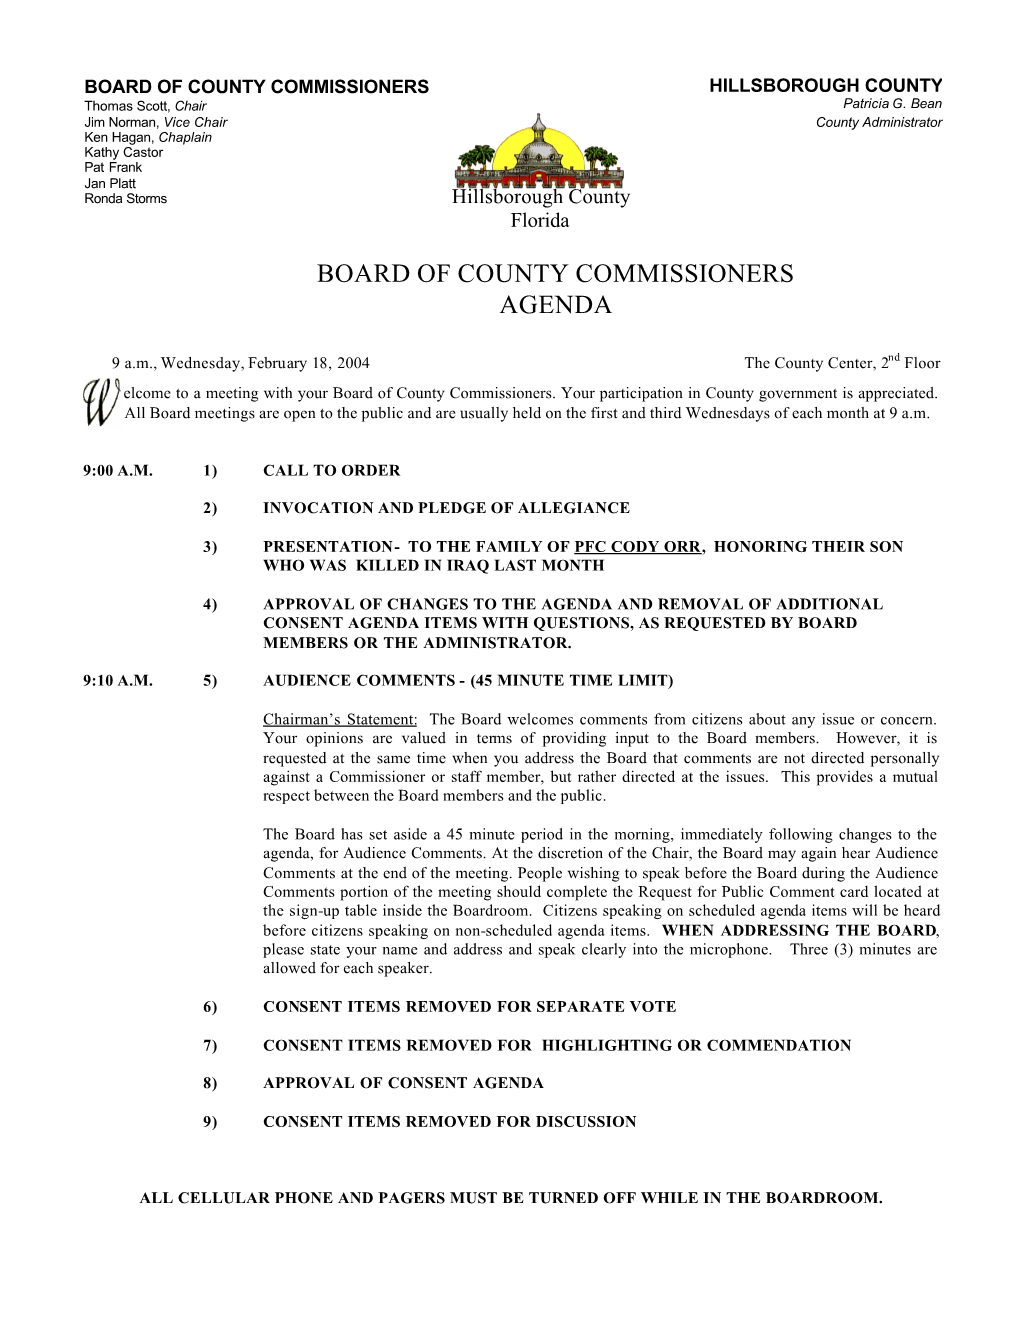 Board of County Commissioners Agenda